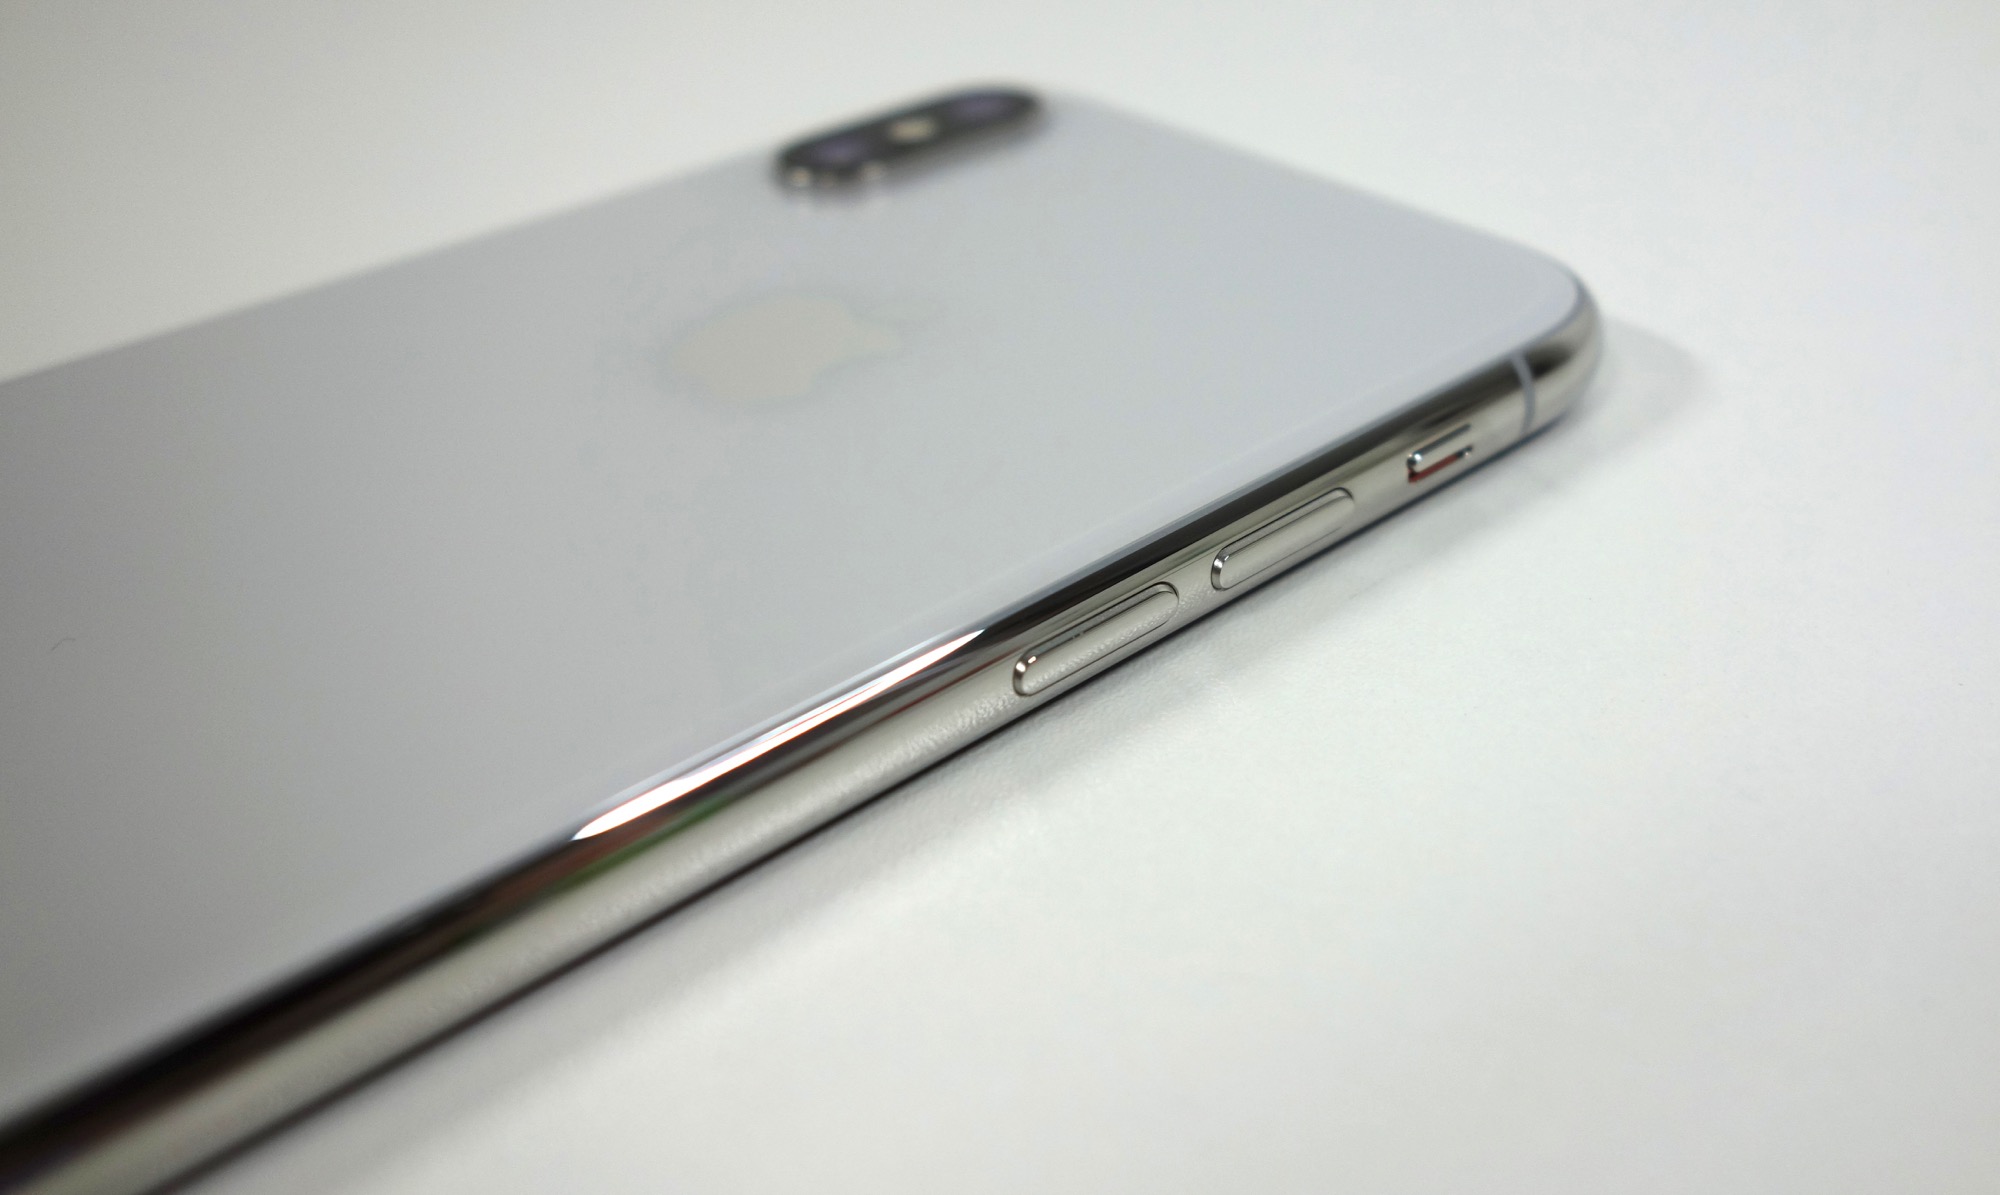 iPhone Xシルバー外観レビュー、iPhone 8と比較して金属部分が光沢質感 